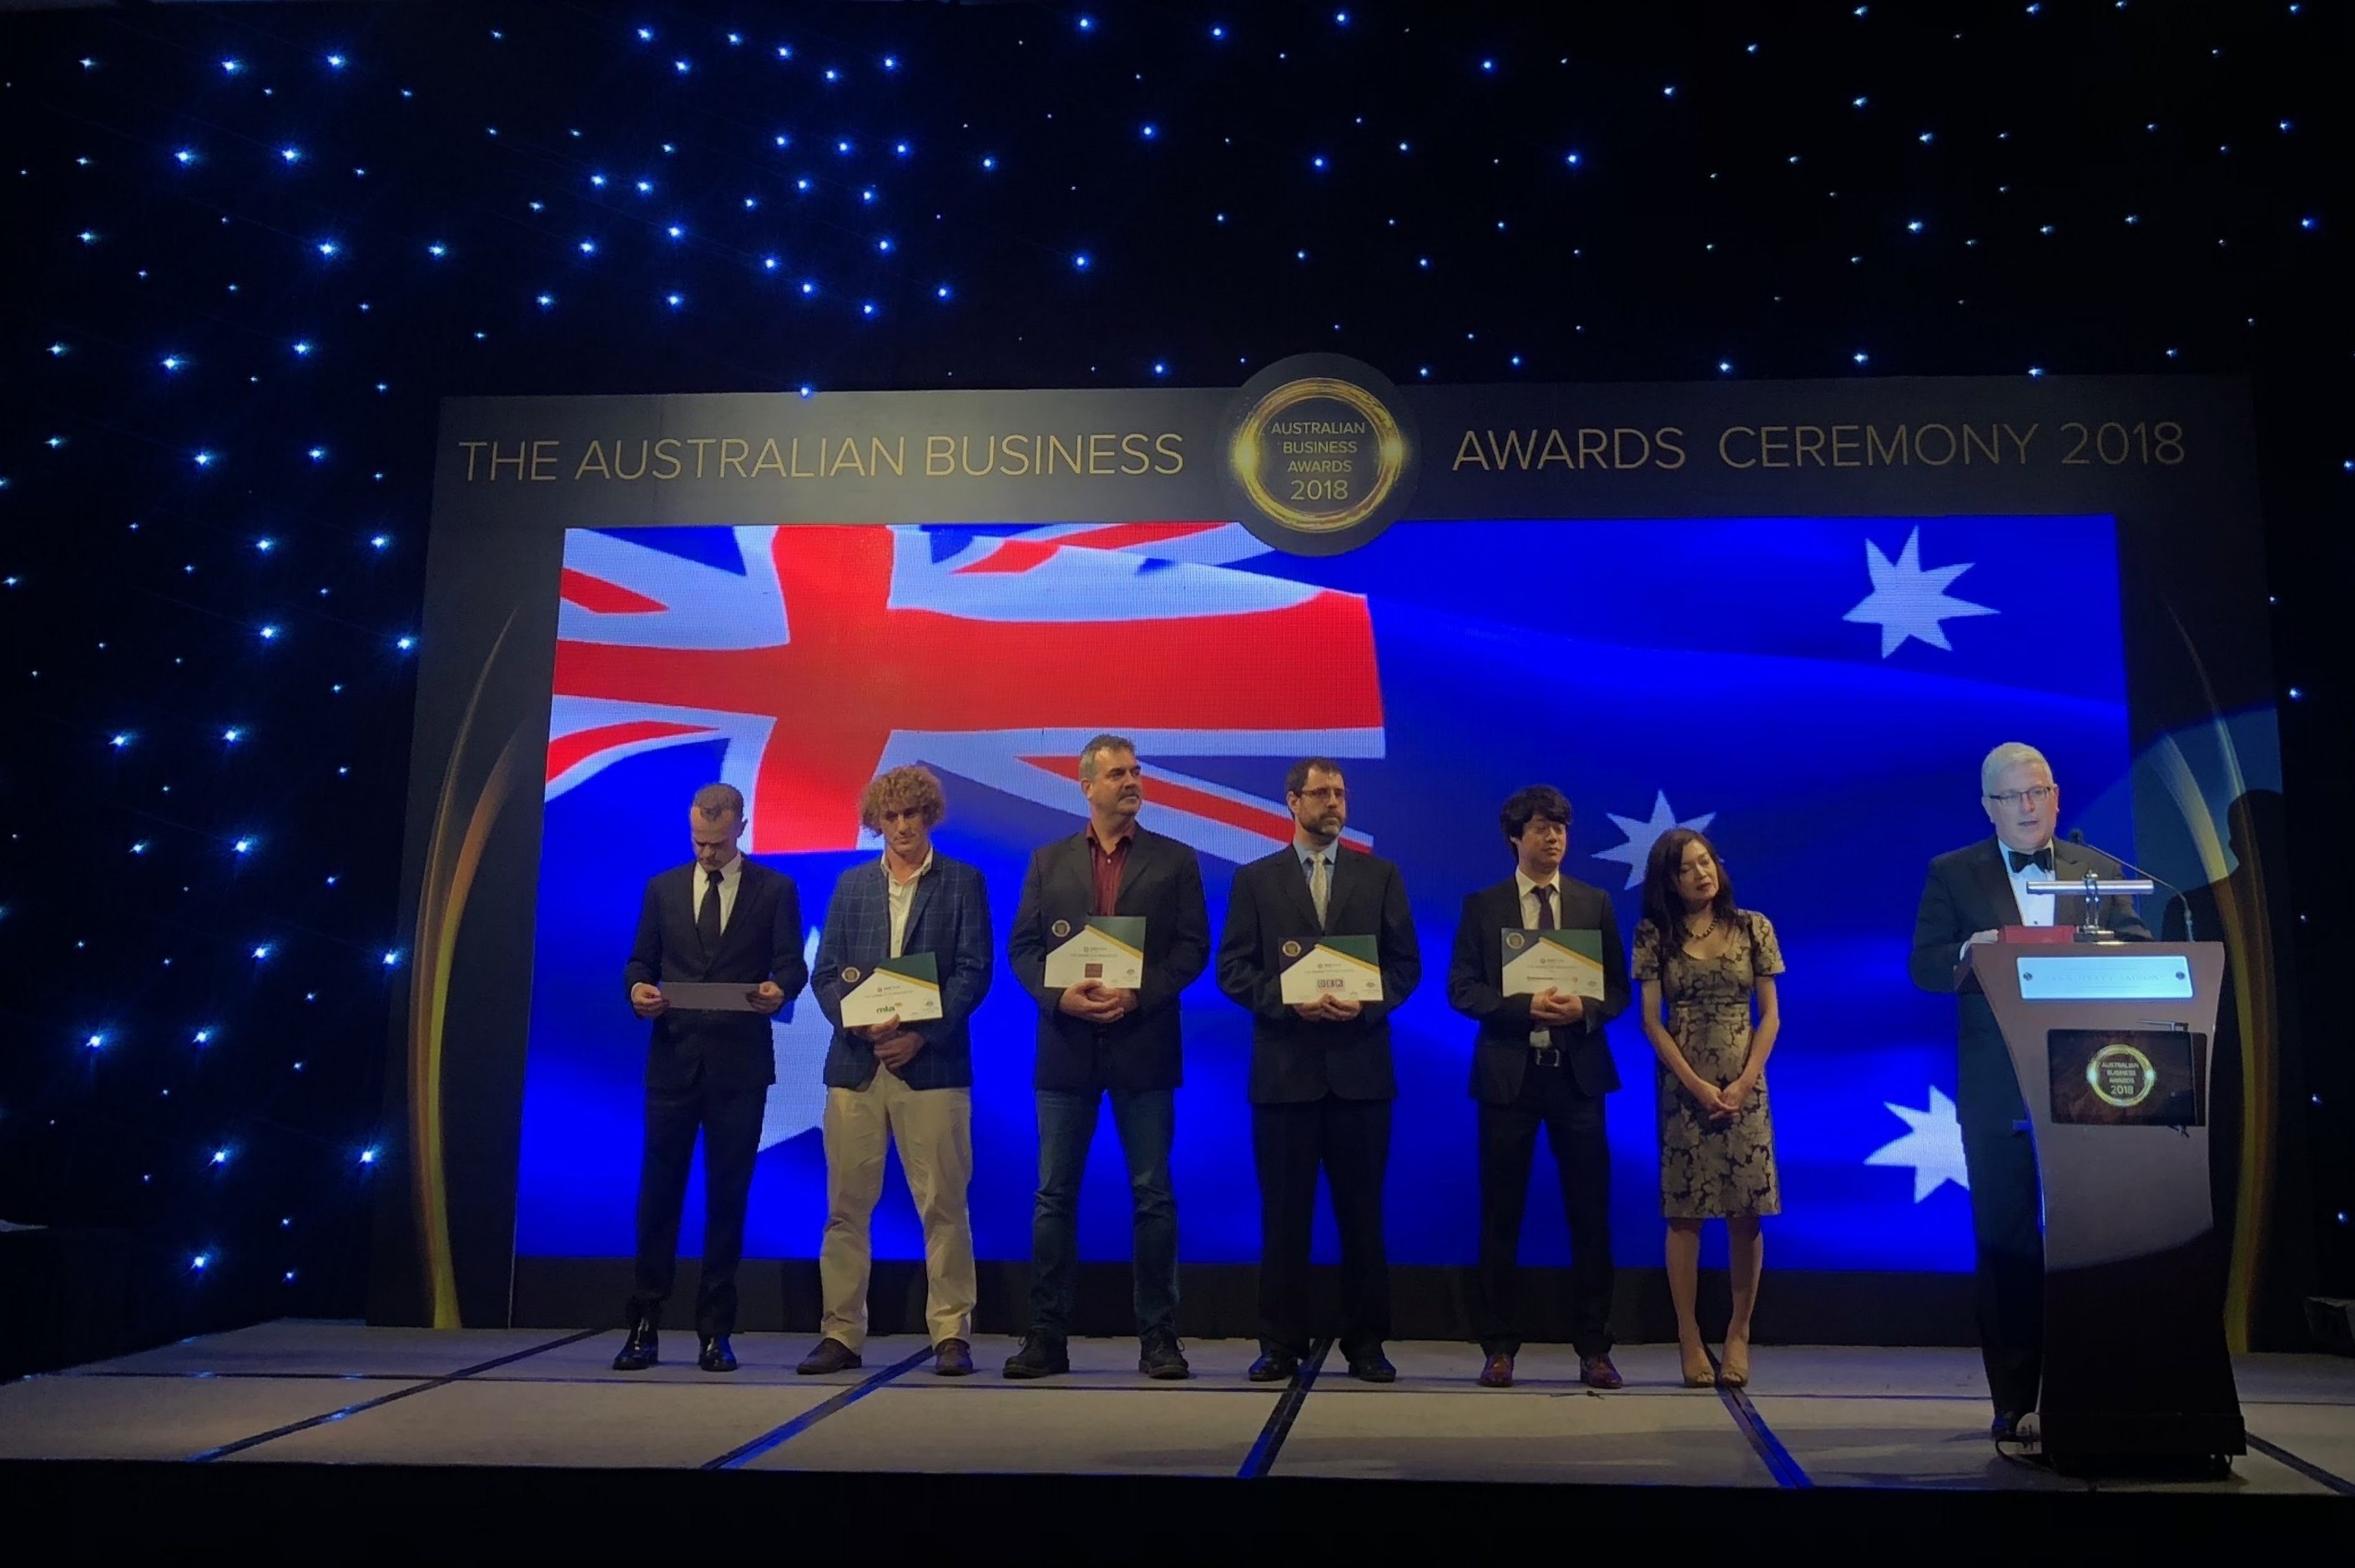 Australian Business Awards 2018 in Vietnam